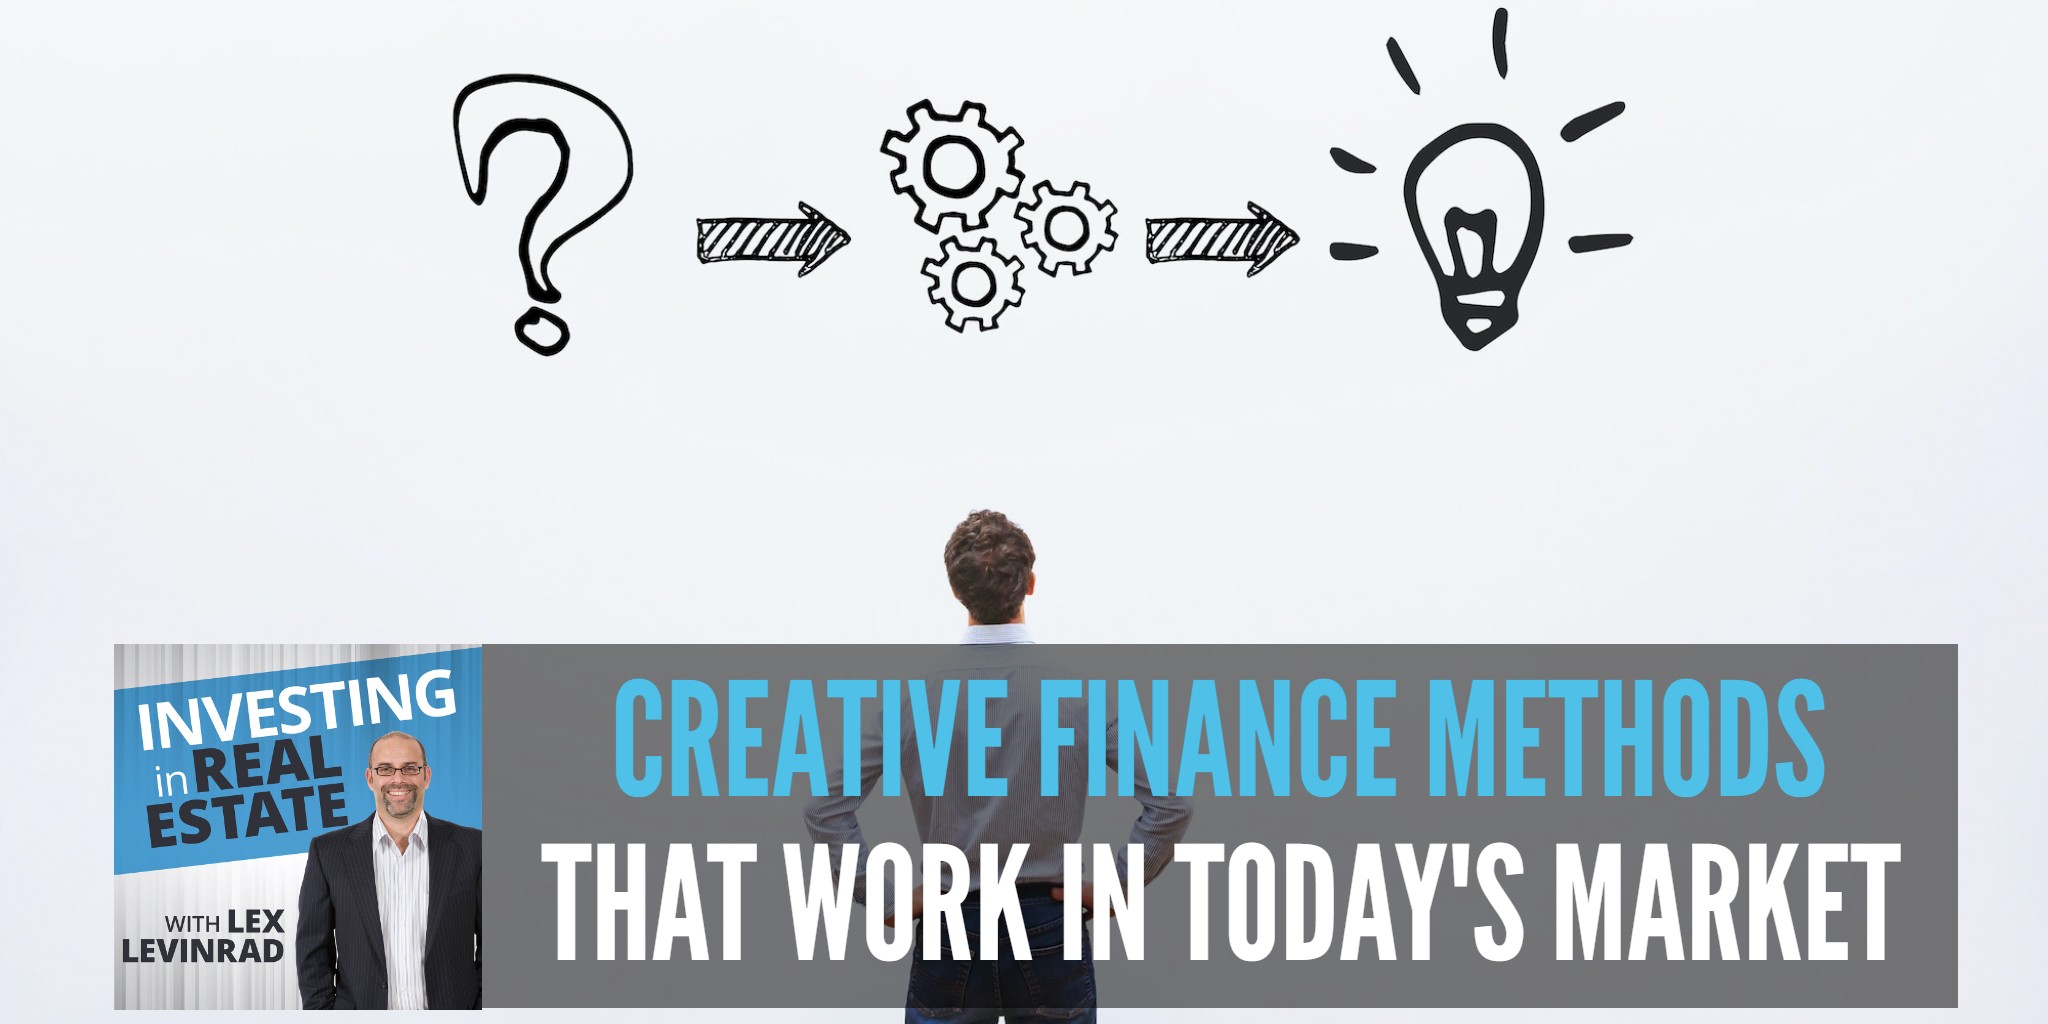 Métodos financeiros criativos que funcionam no mercado atual